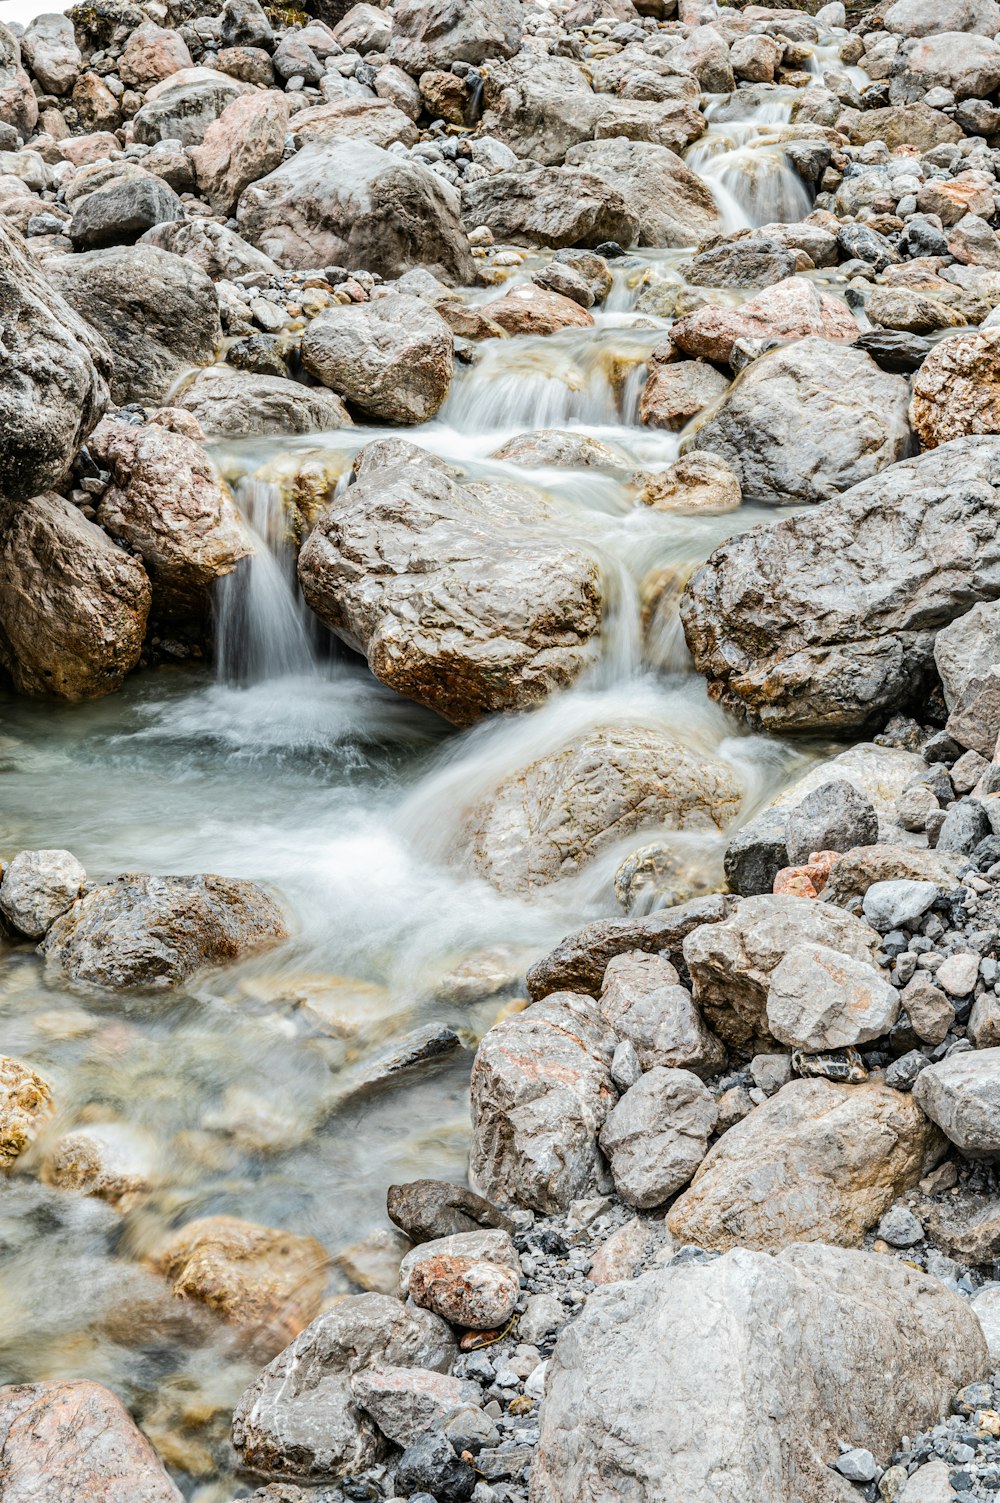 a small stream of water running between rocks